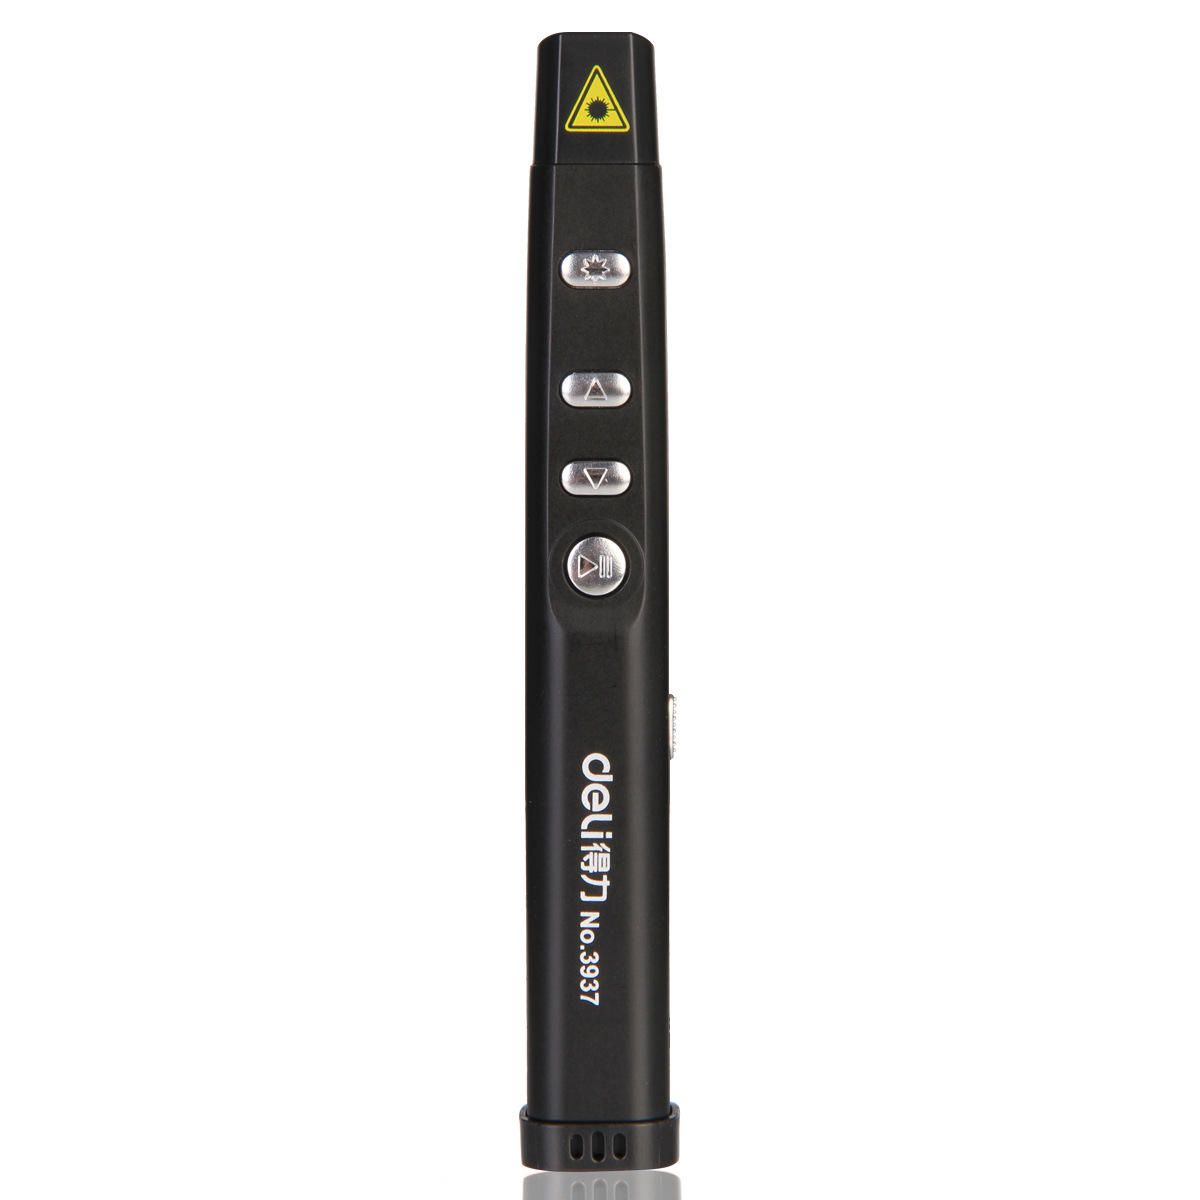 

Deli 3937 Wireless Presenter Red Laser Flip Pen PPT Laser Page Pen Clicker Presentation Pen USB Remote Control Surport P